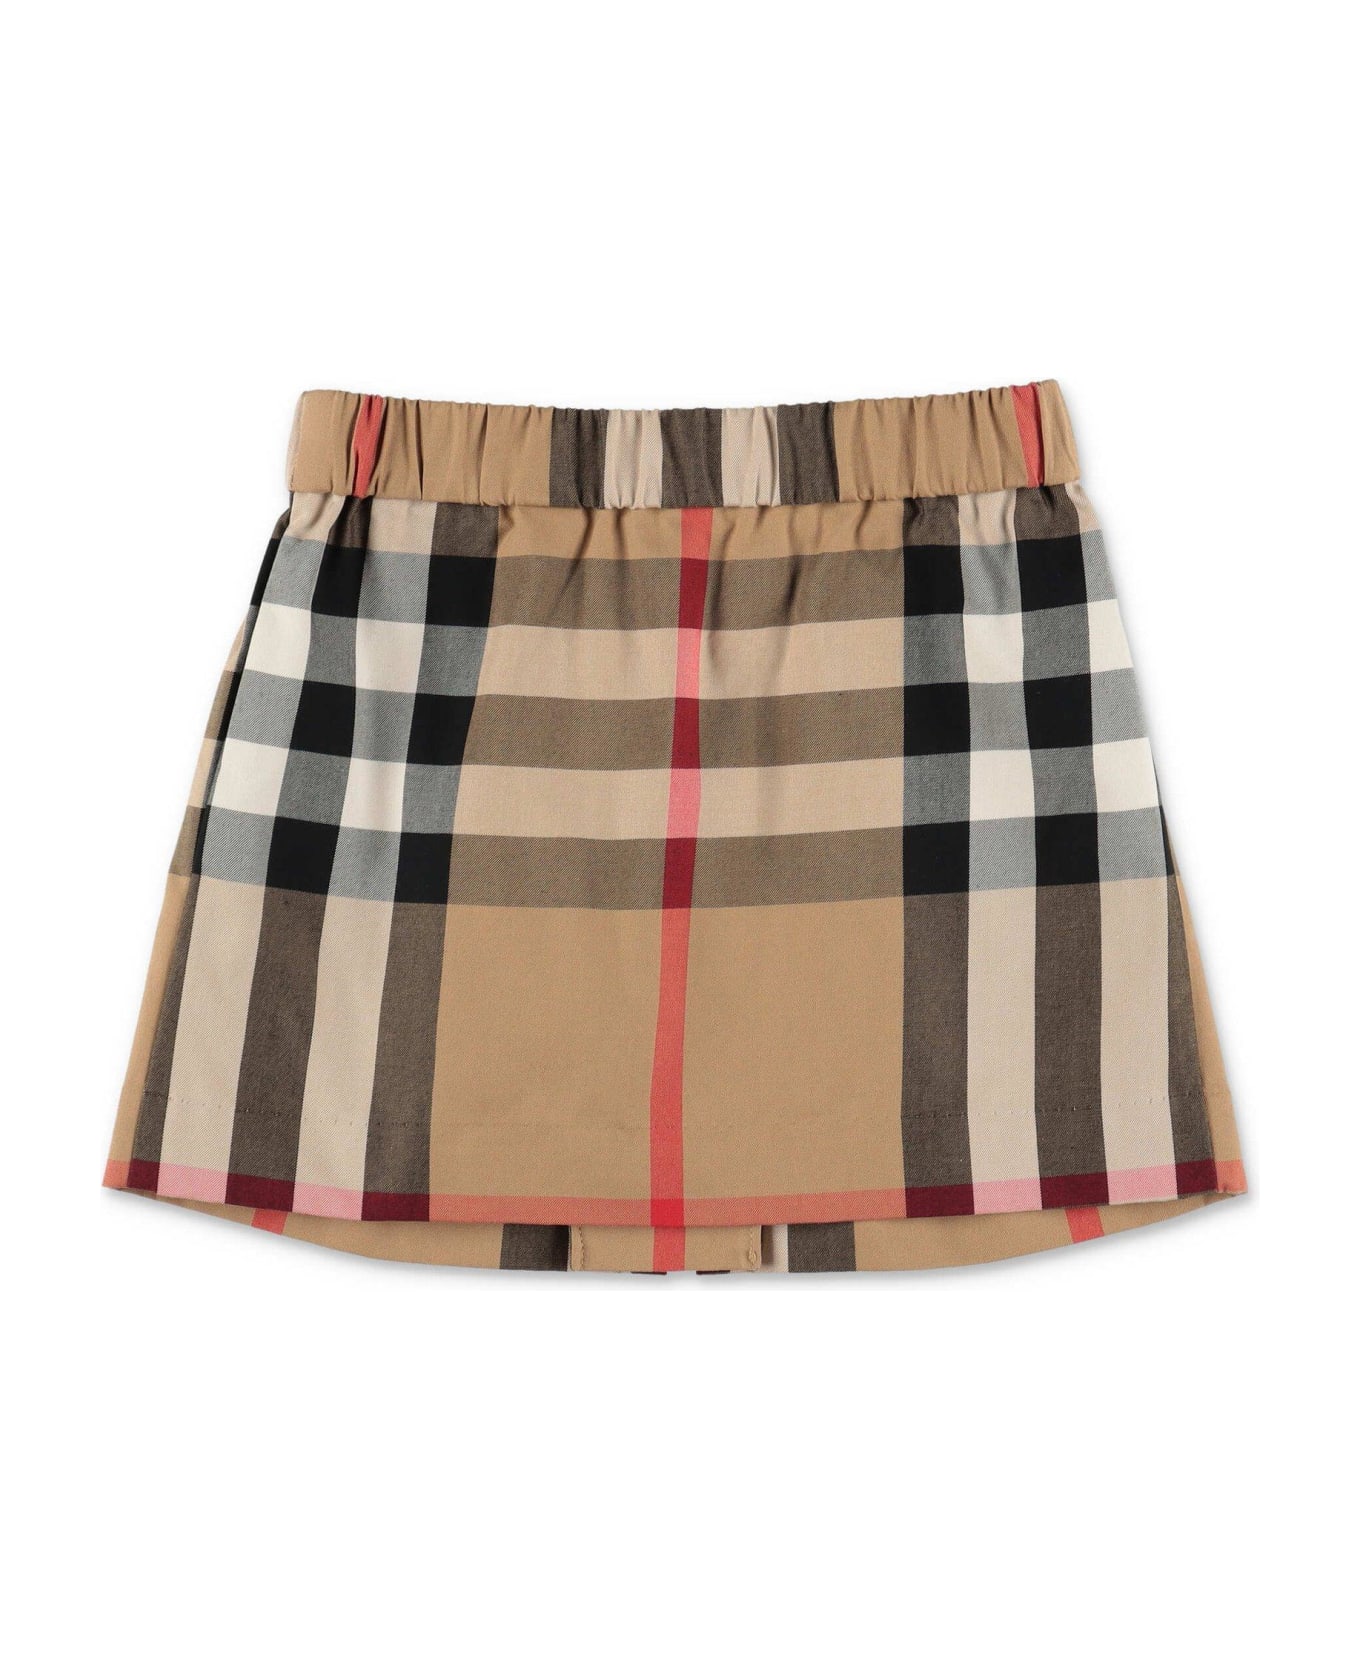 Burberry Checked Elastic Waist Skirt - Archive beige ip chk